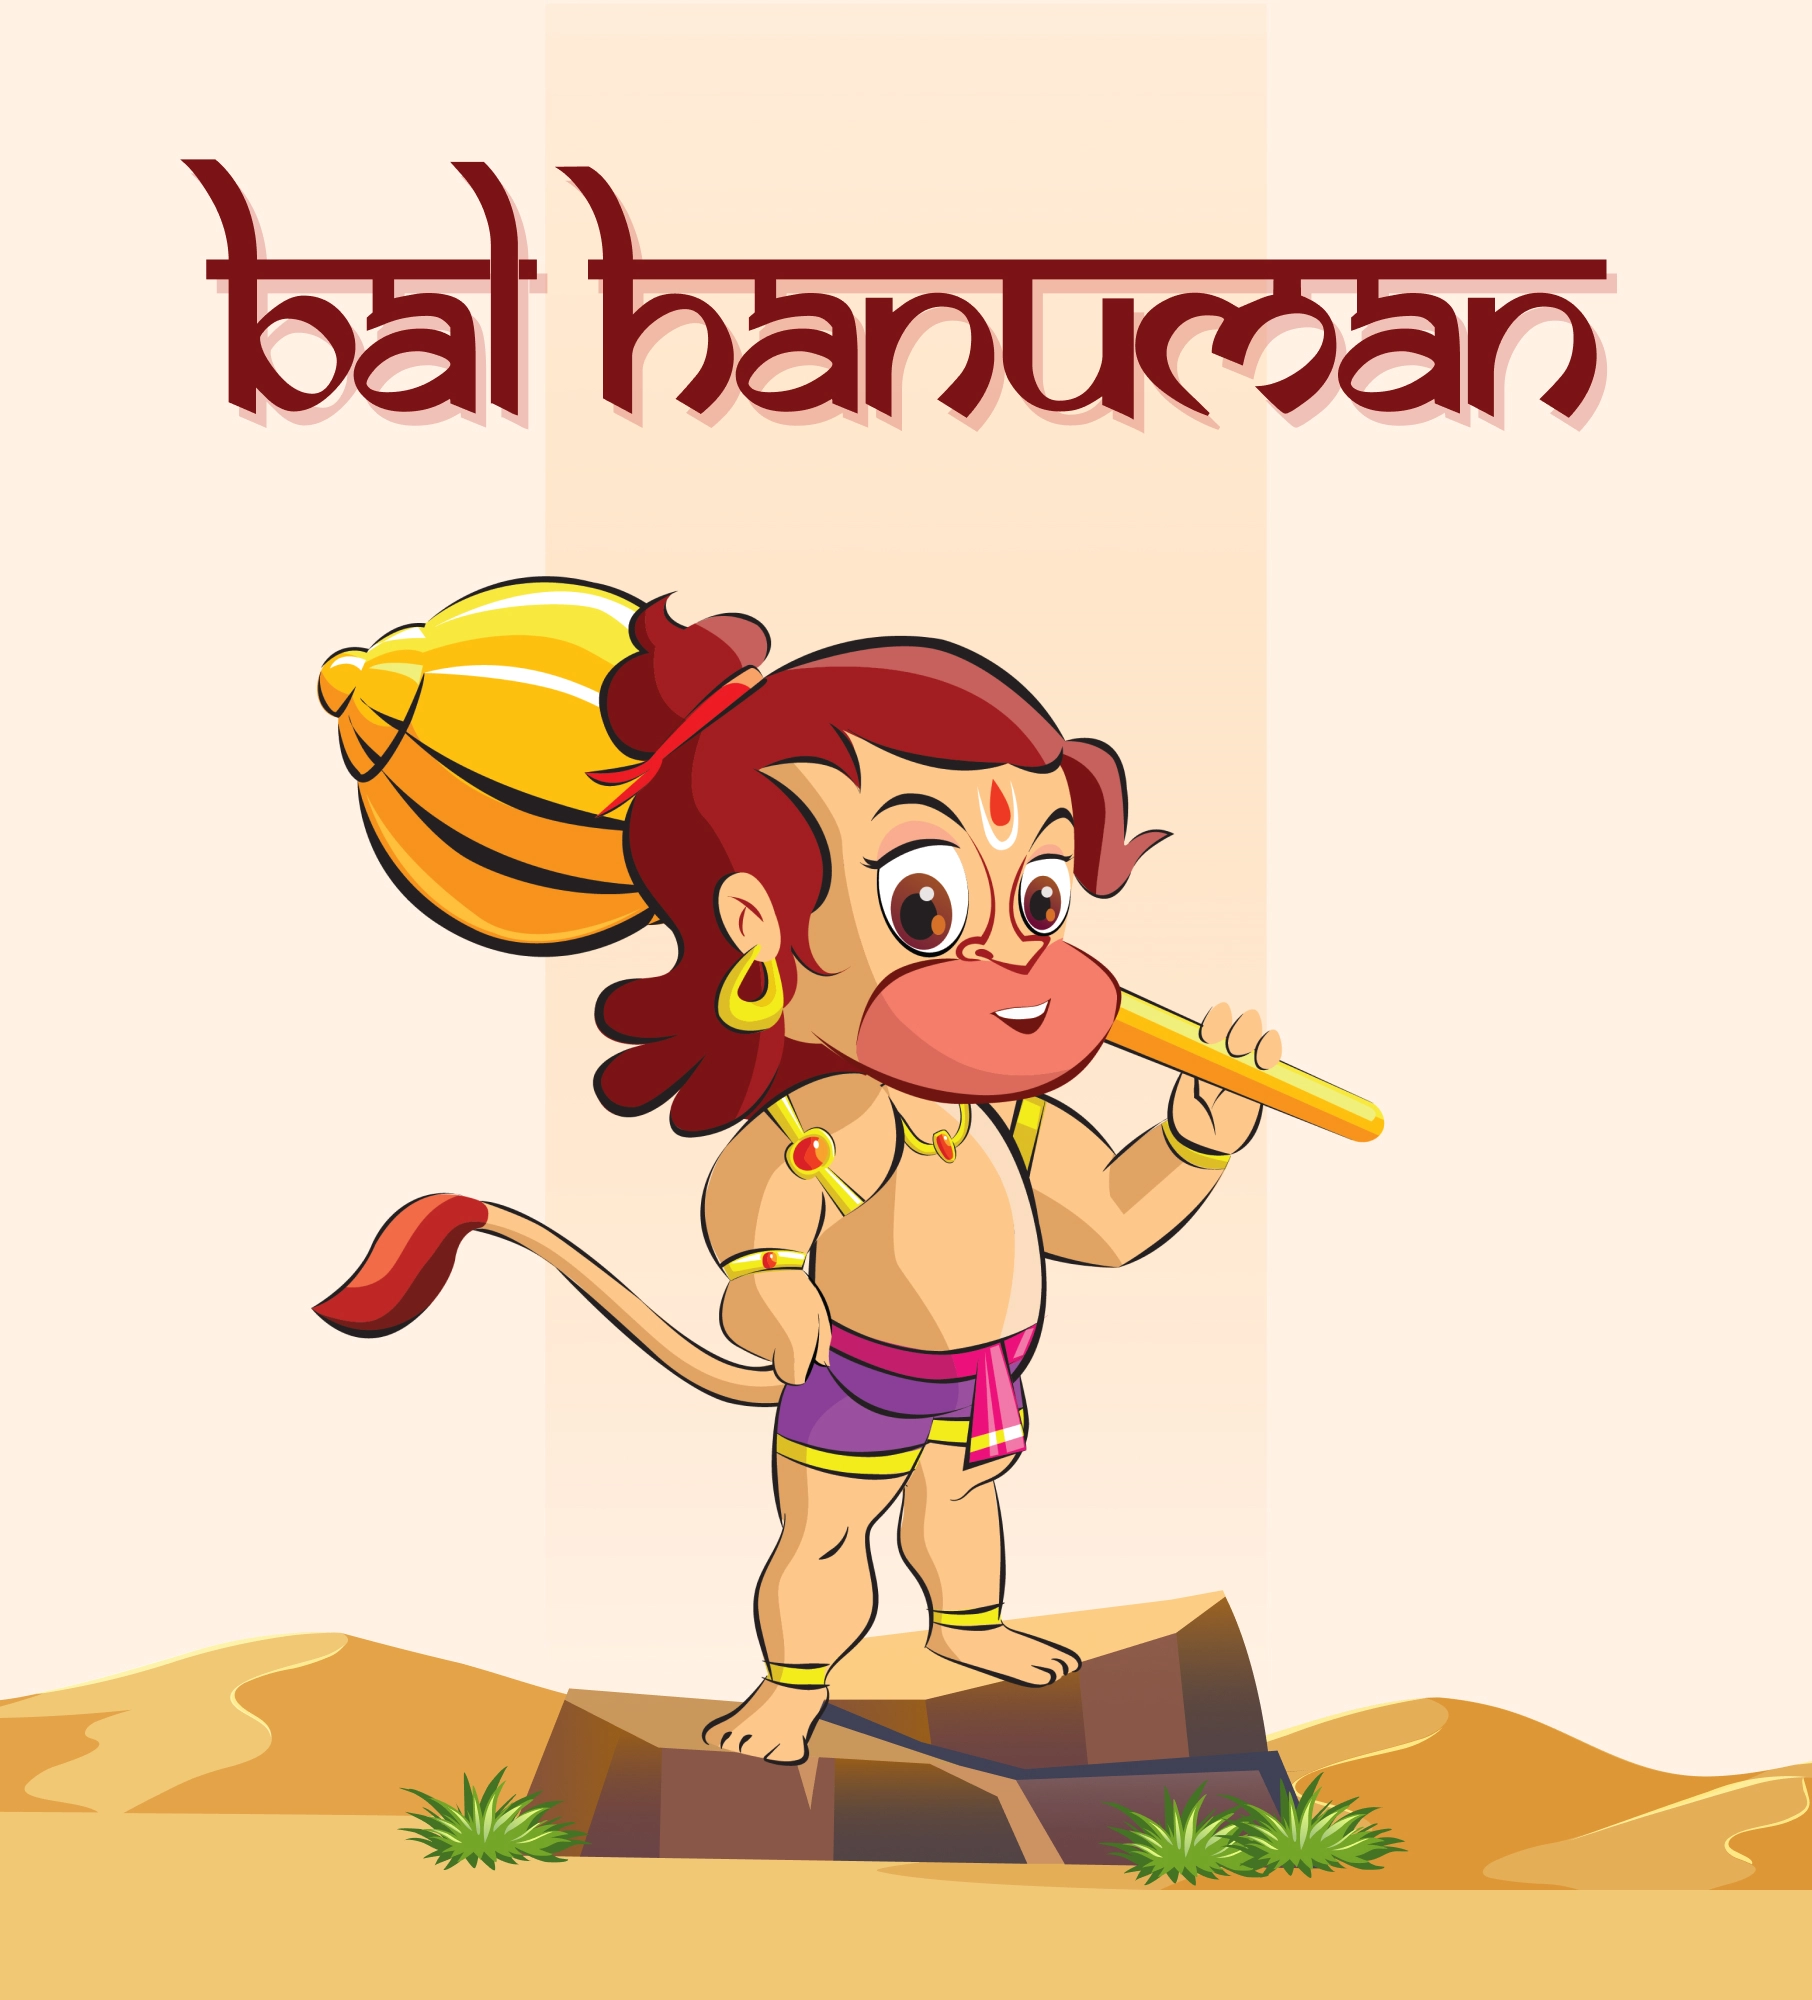 bal hanuman game